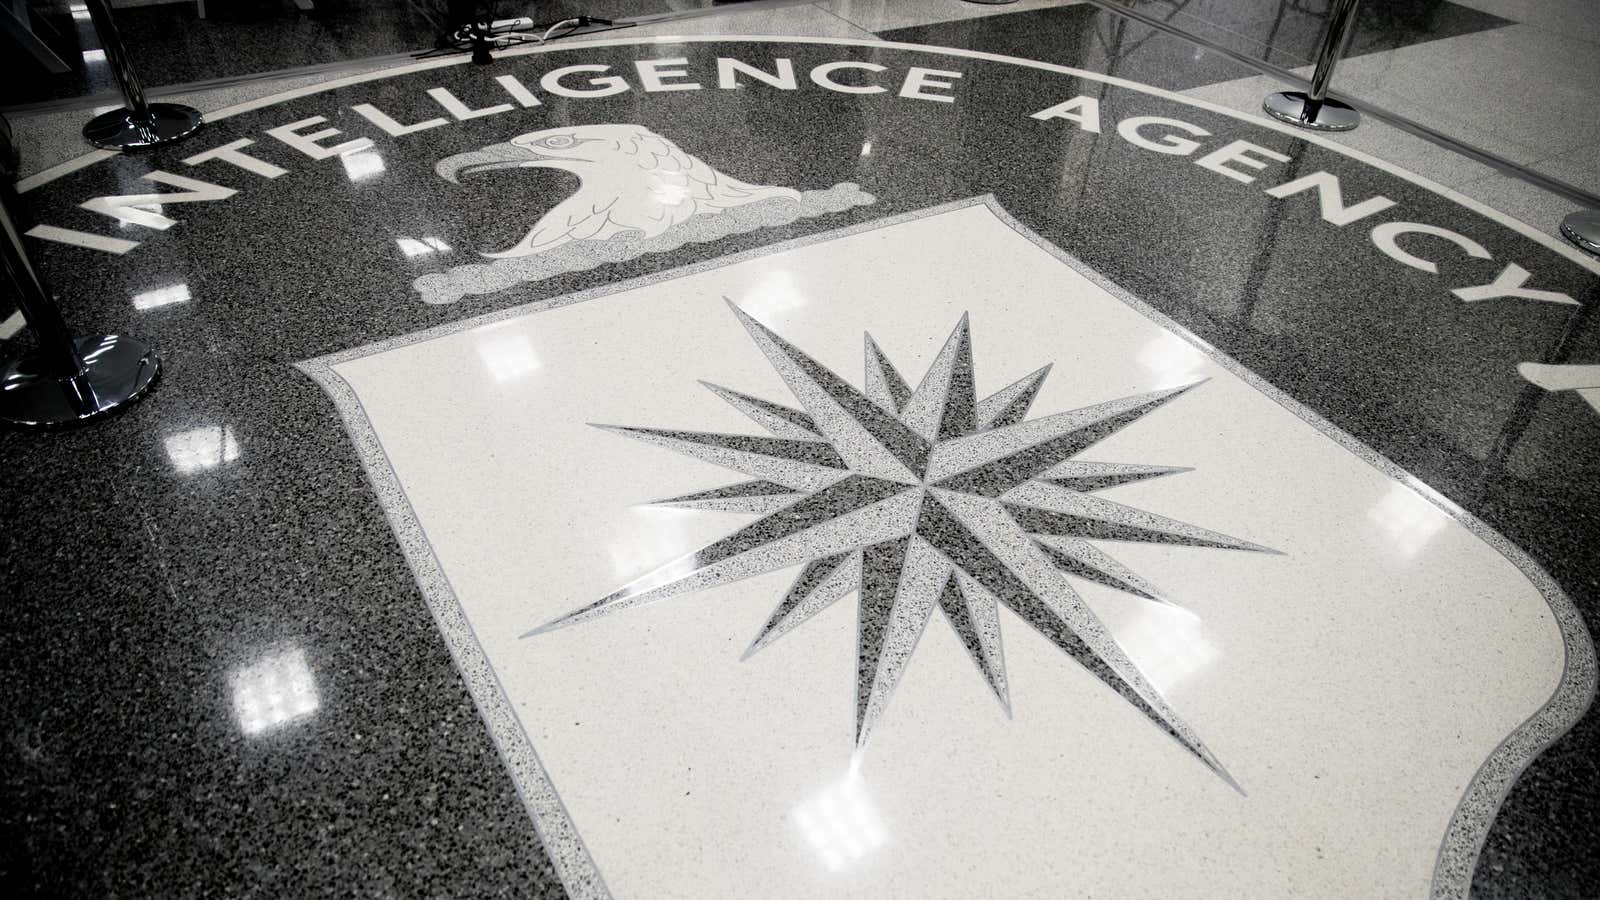 Inside the CIA.